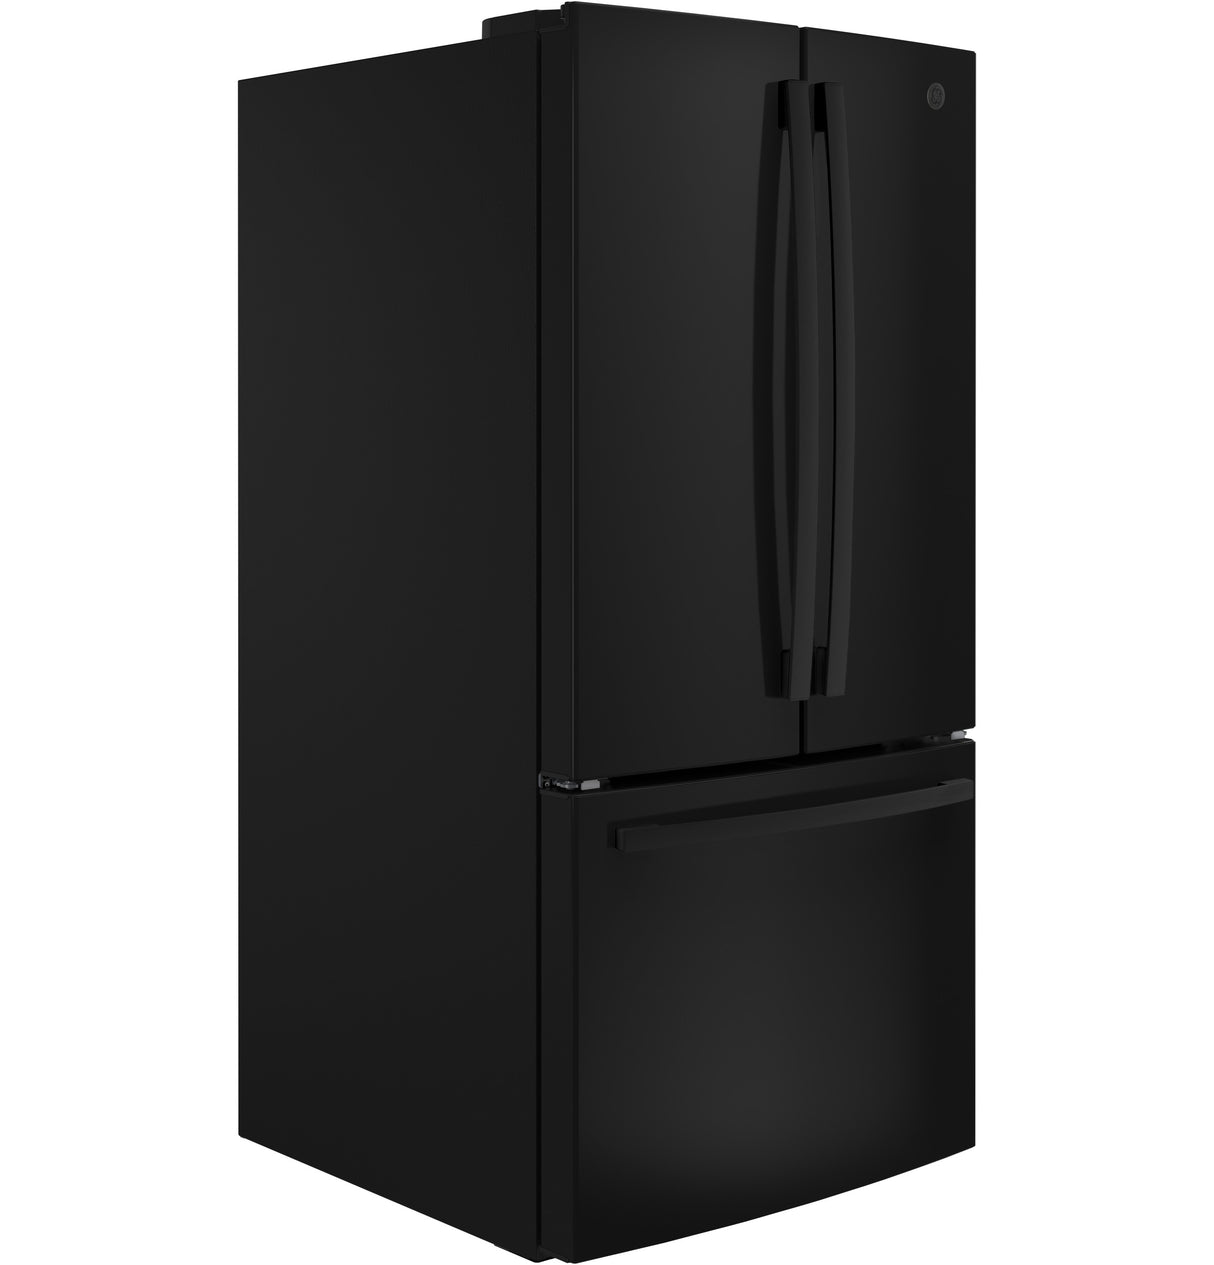 GE(R) ENERGY STAR(R) 18.6 Cu. Ft. Counter-Depth French-Door Refrigerator - (GWE19JGLBB)